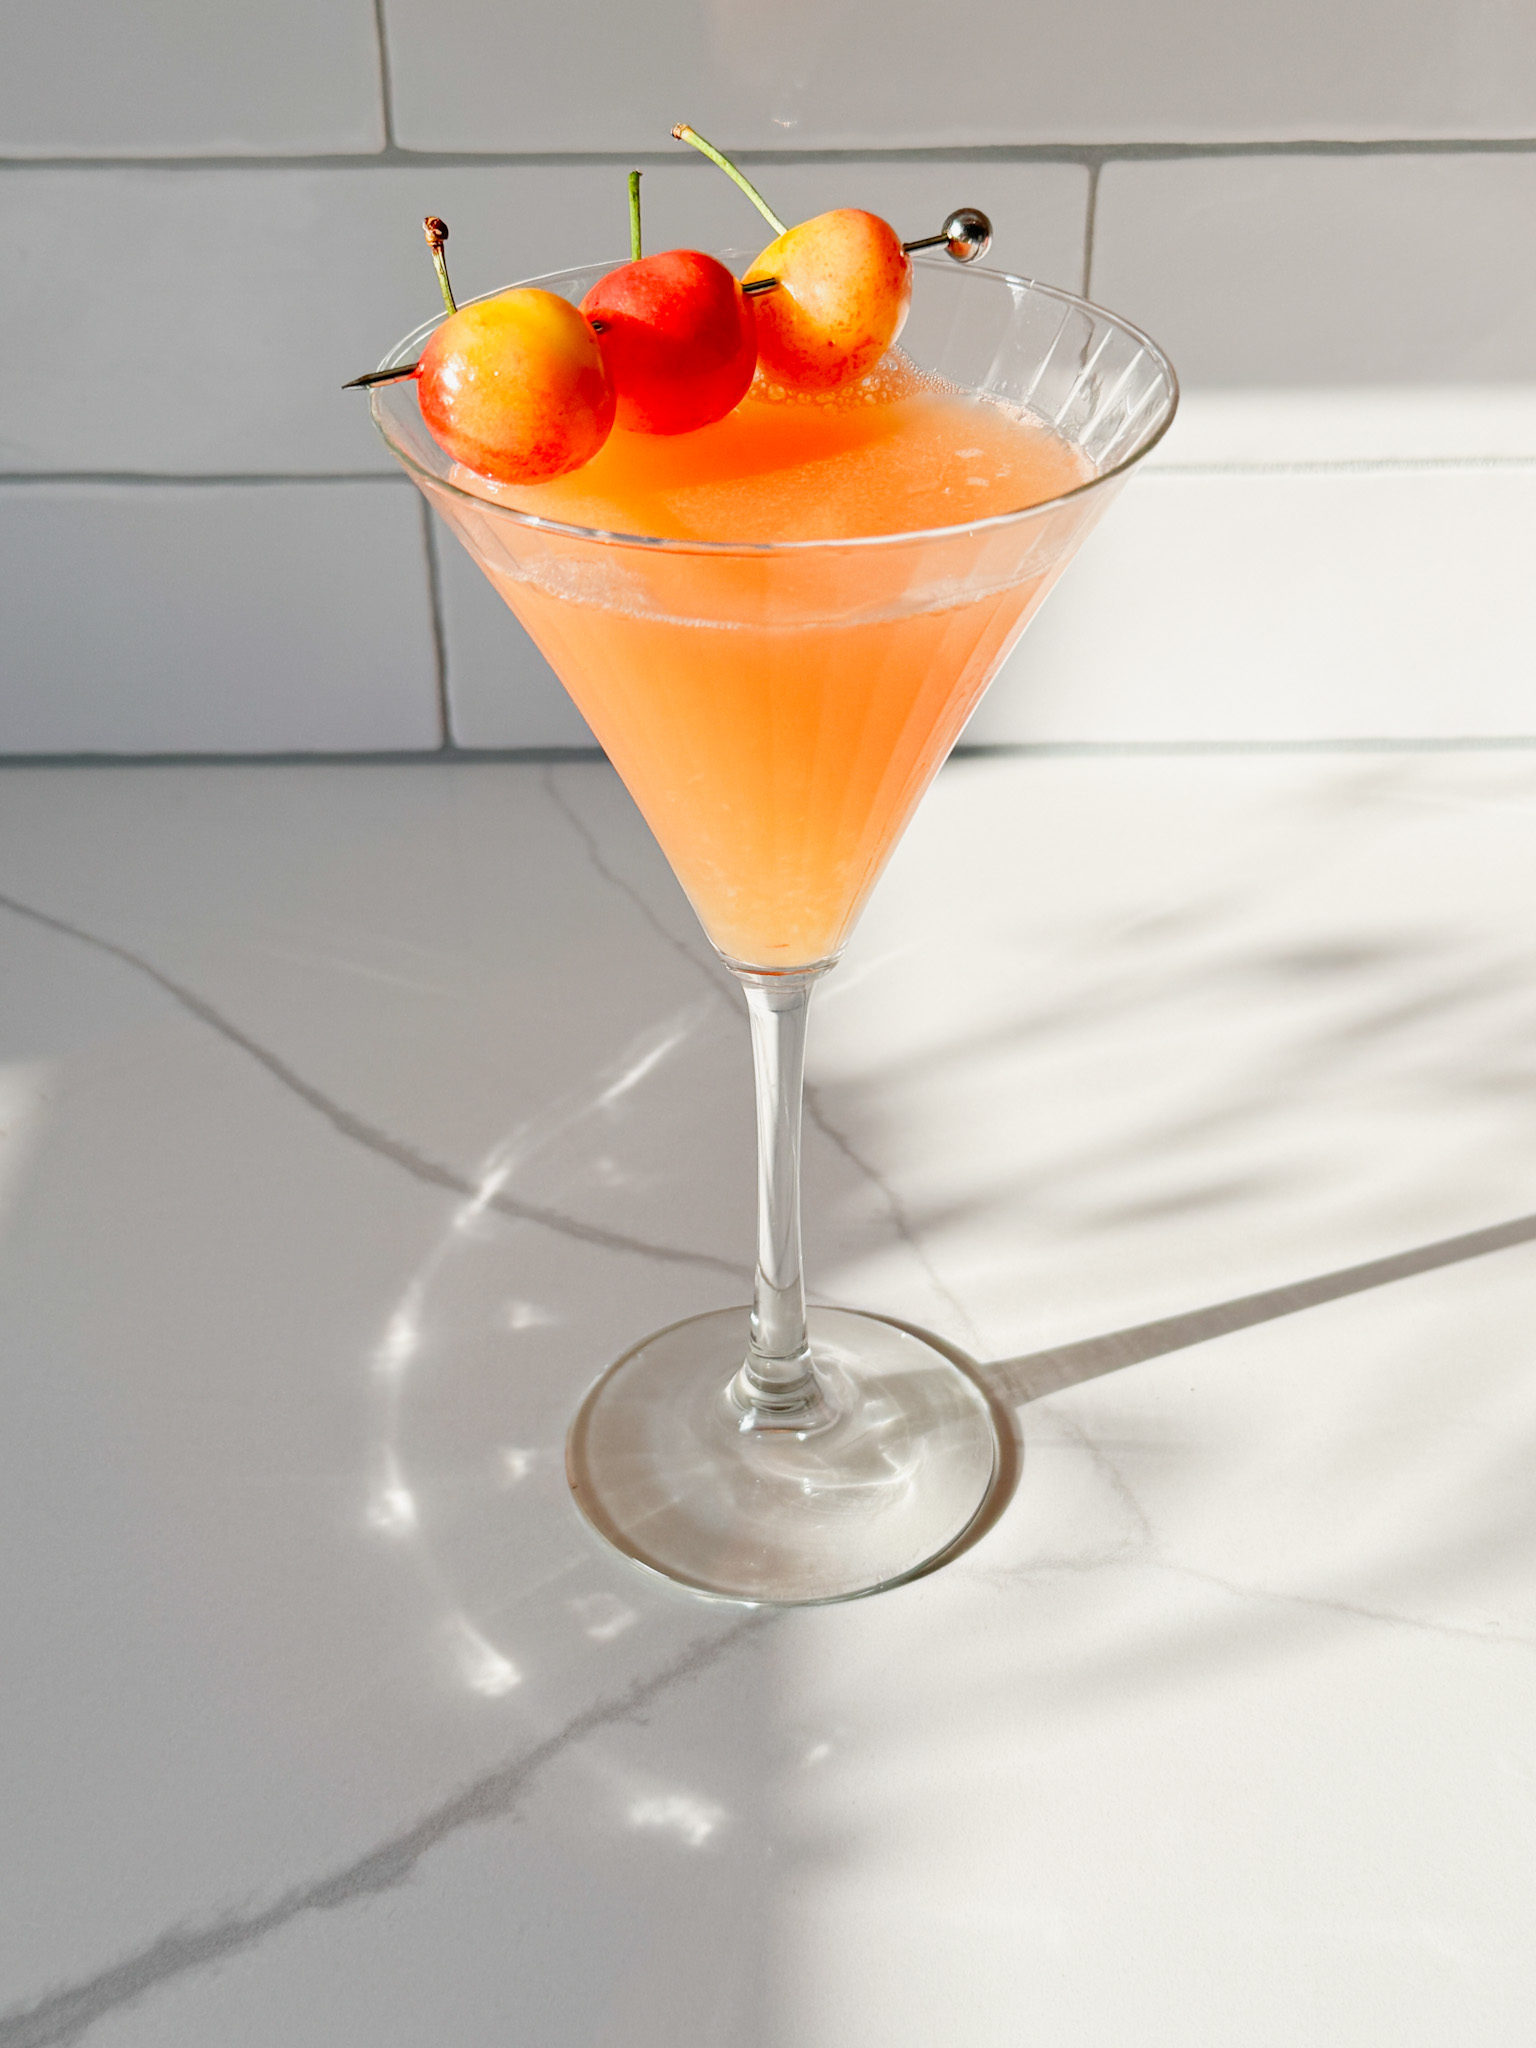 Cherry sea breeze martini with Ranier cherry garnish